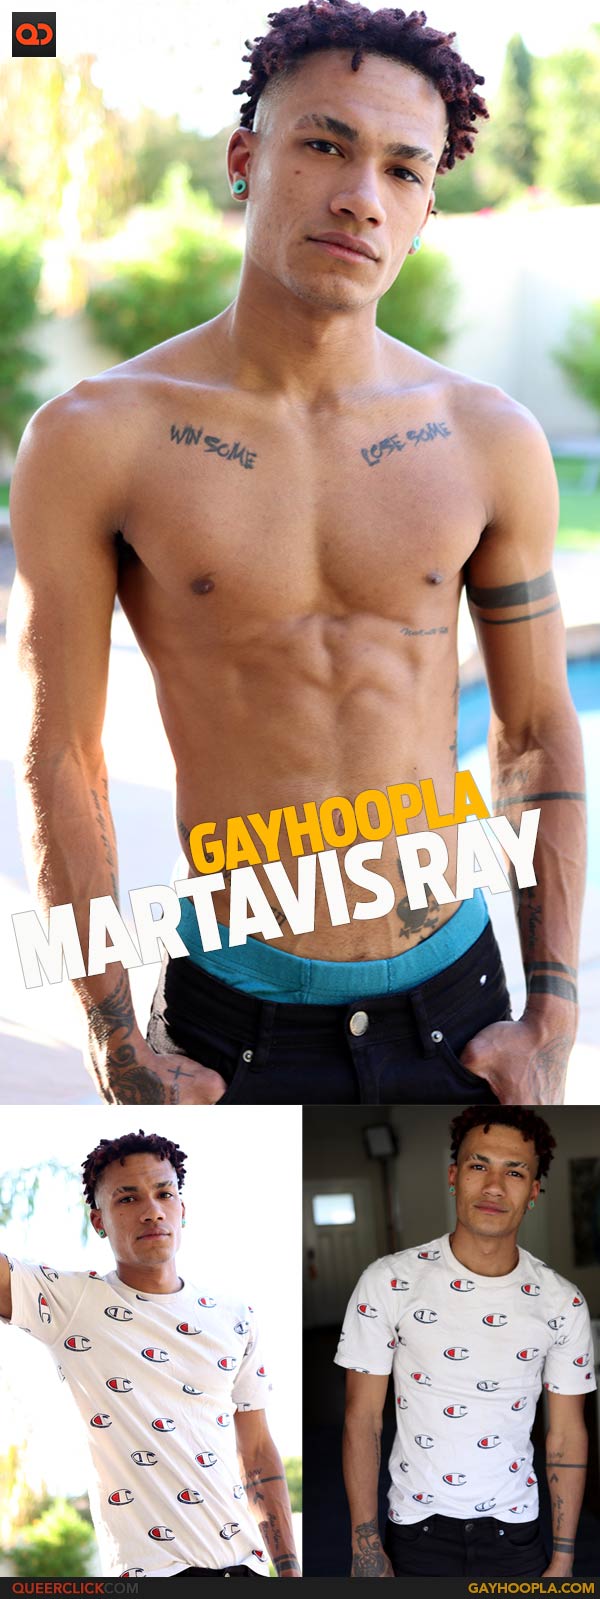 GayHoopla Martavis